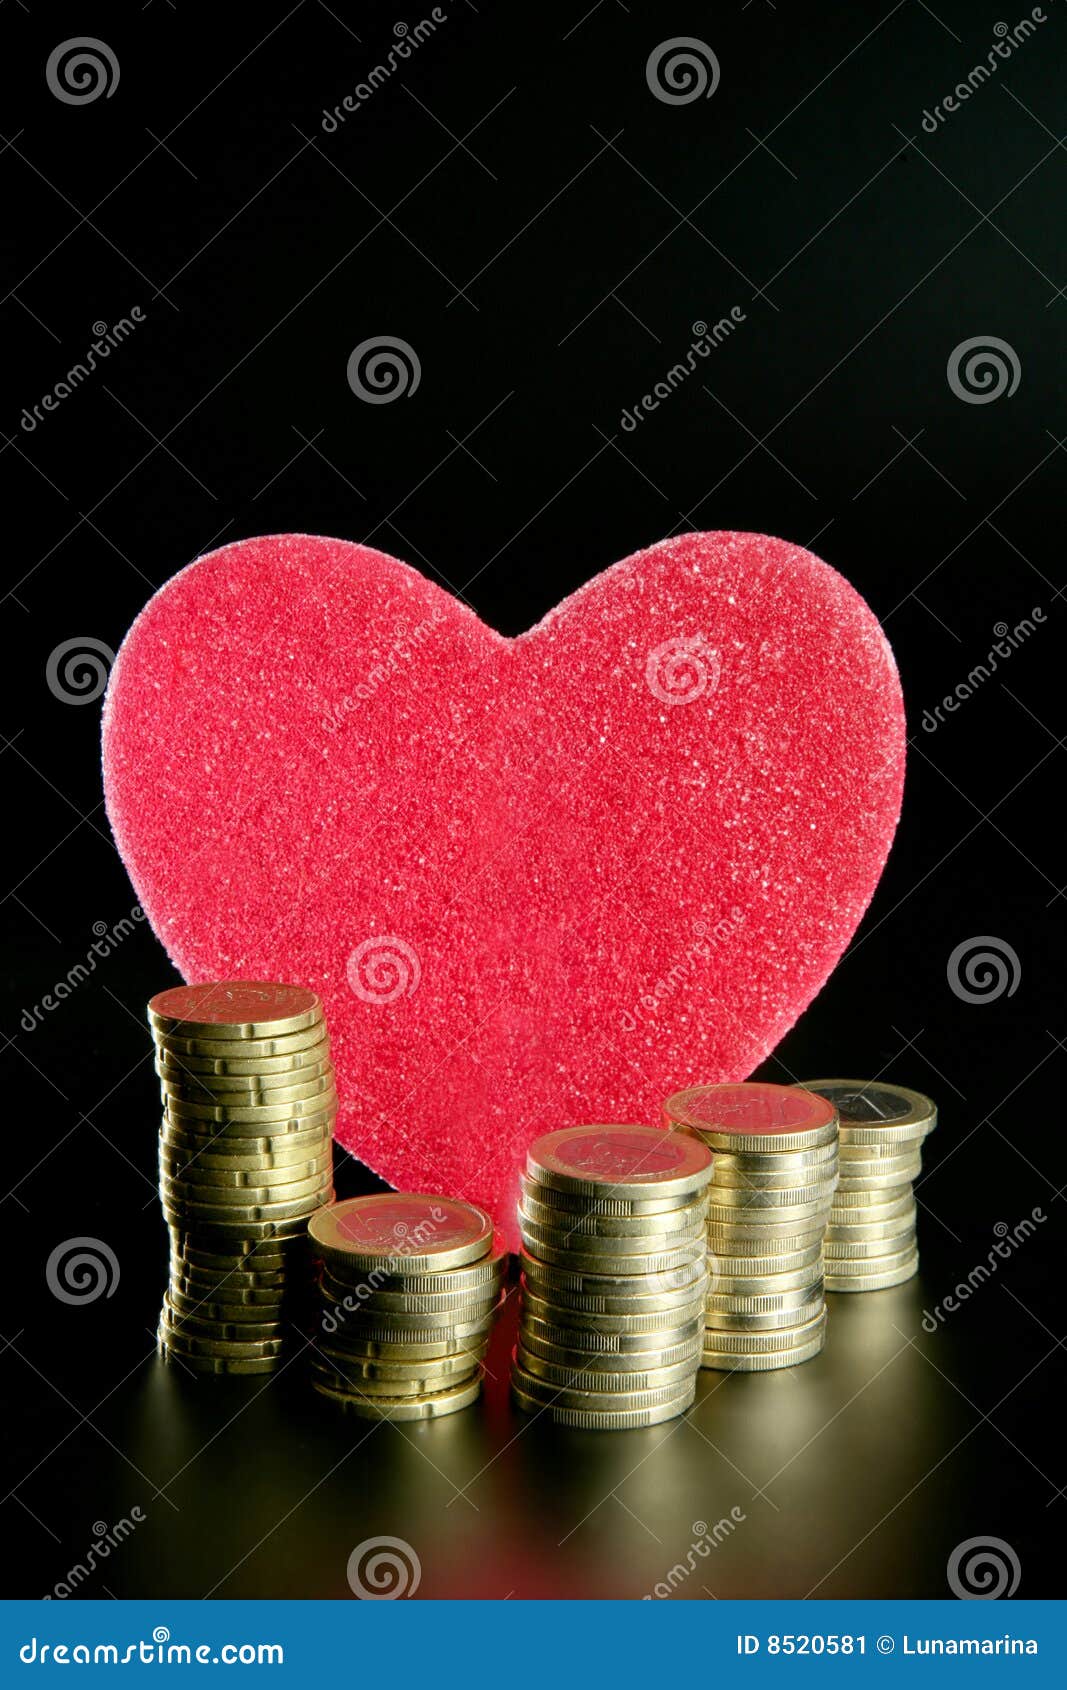 love and money metaphor